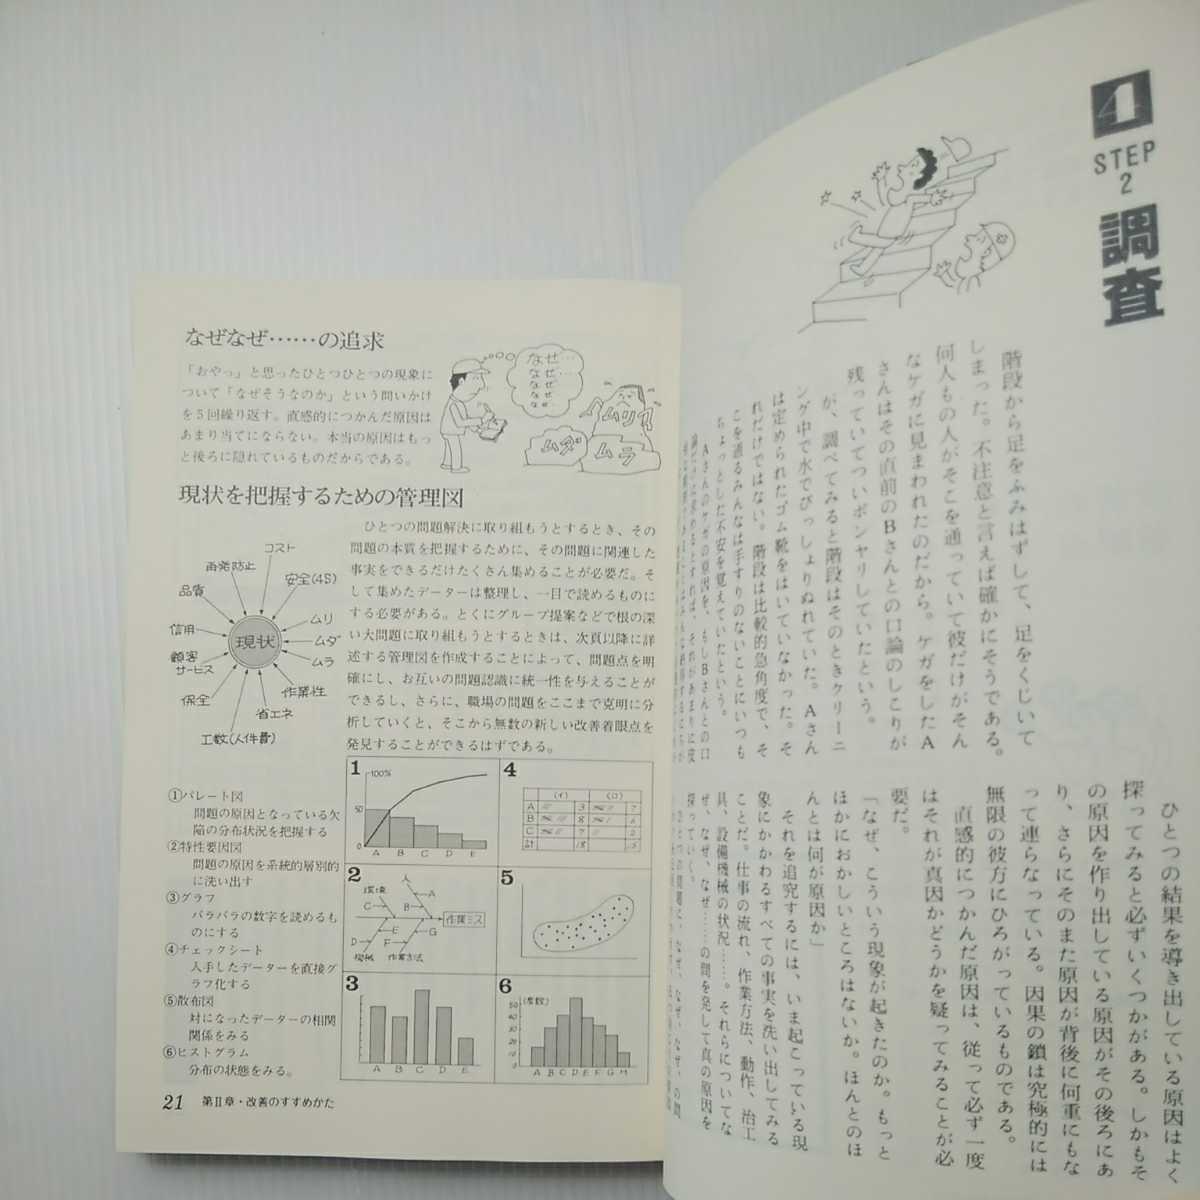 zaa-433♪改善提案ハンドブック (1983年) － 古書, 1983/1/1 日本HR協会 (著)近代経営社